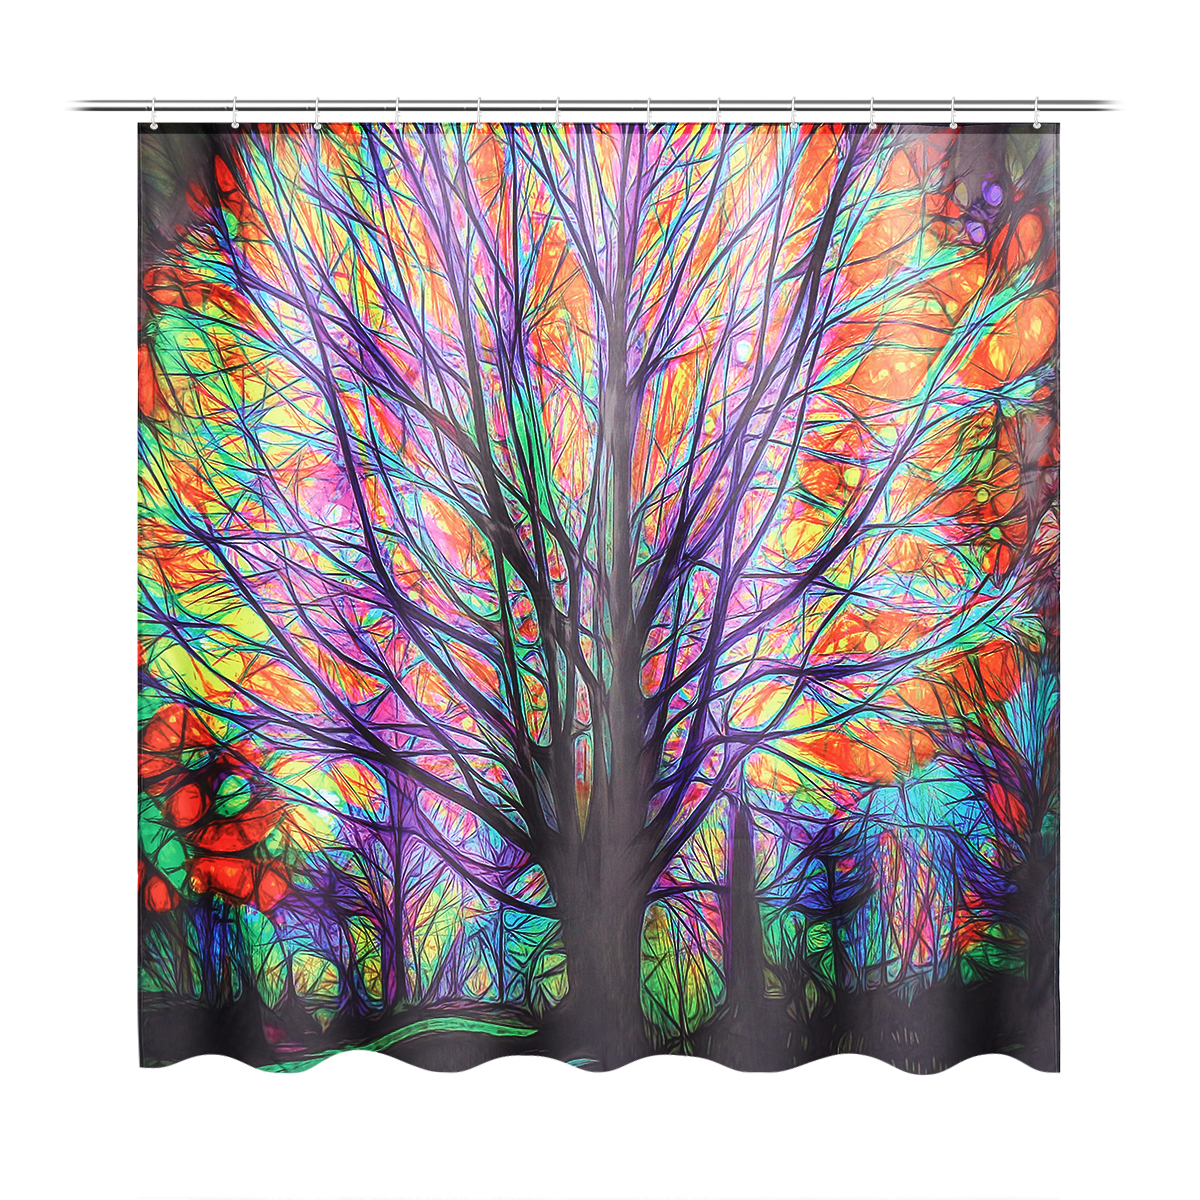 180x180cm-Colorful-Tree-Leaves-Waterproof-Bathroom-Shower-Curtain-w-12-Hooks-1558895-1